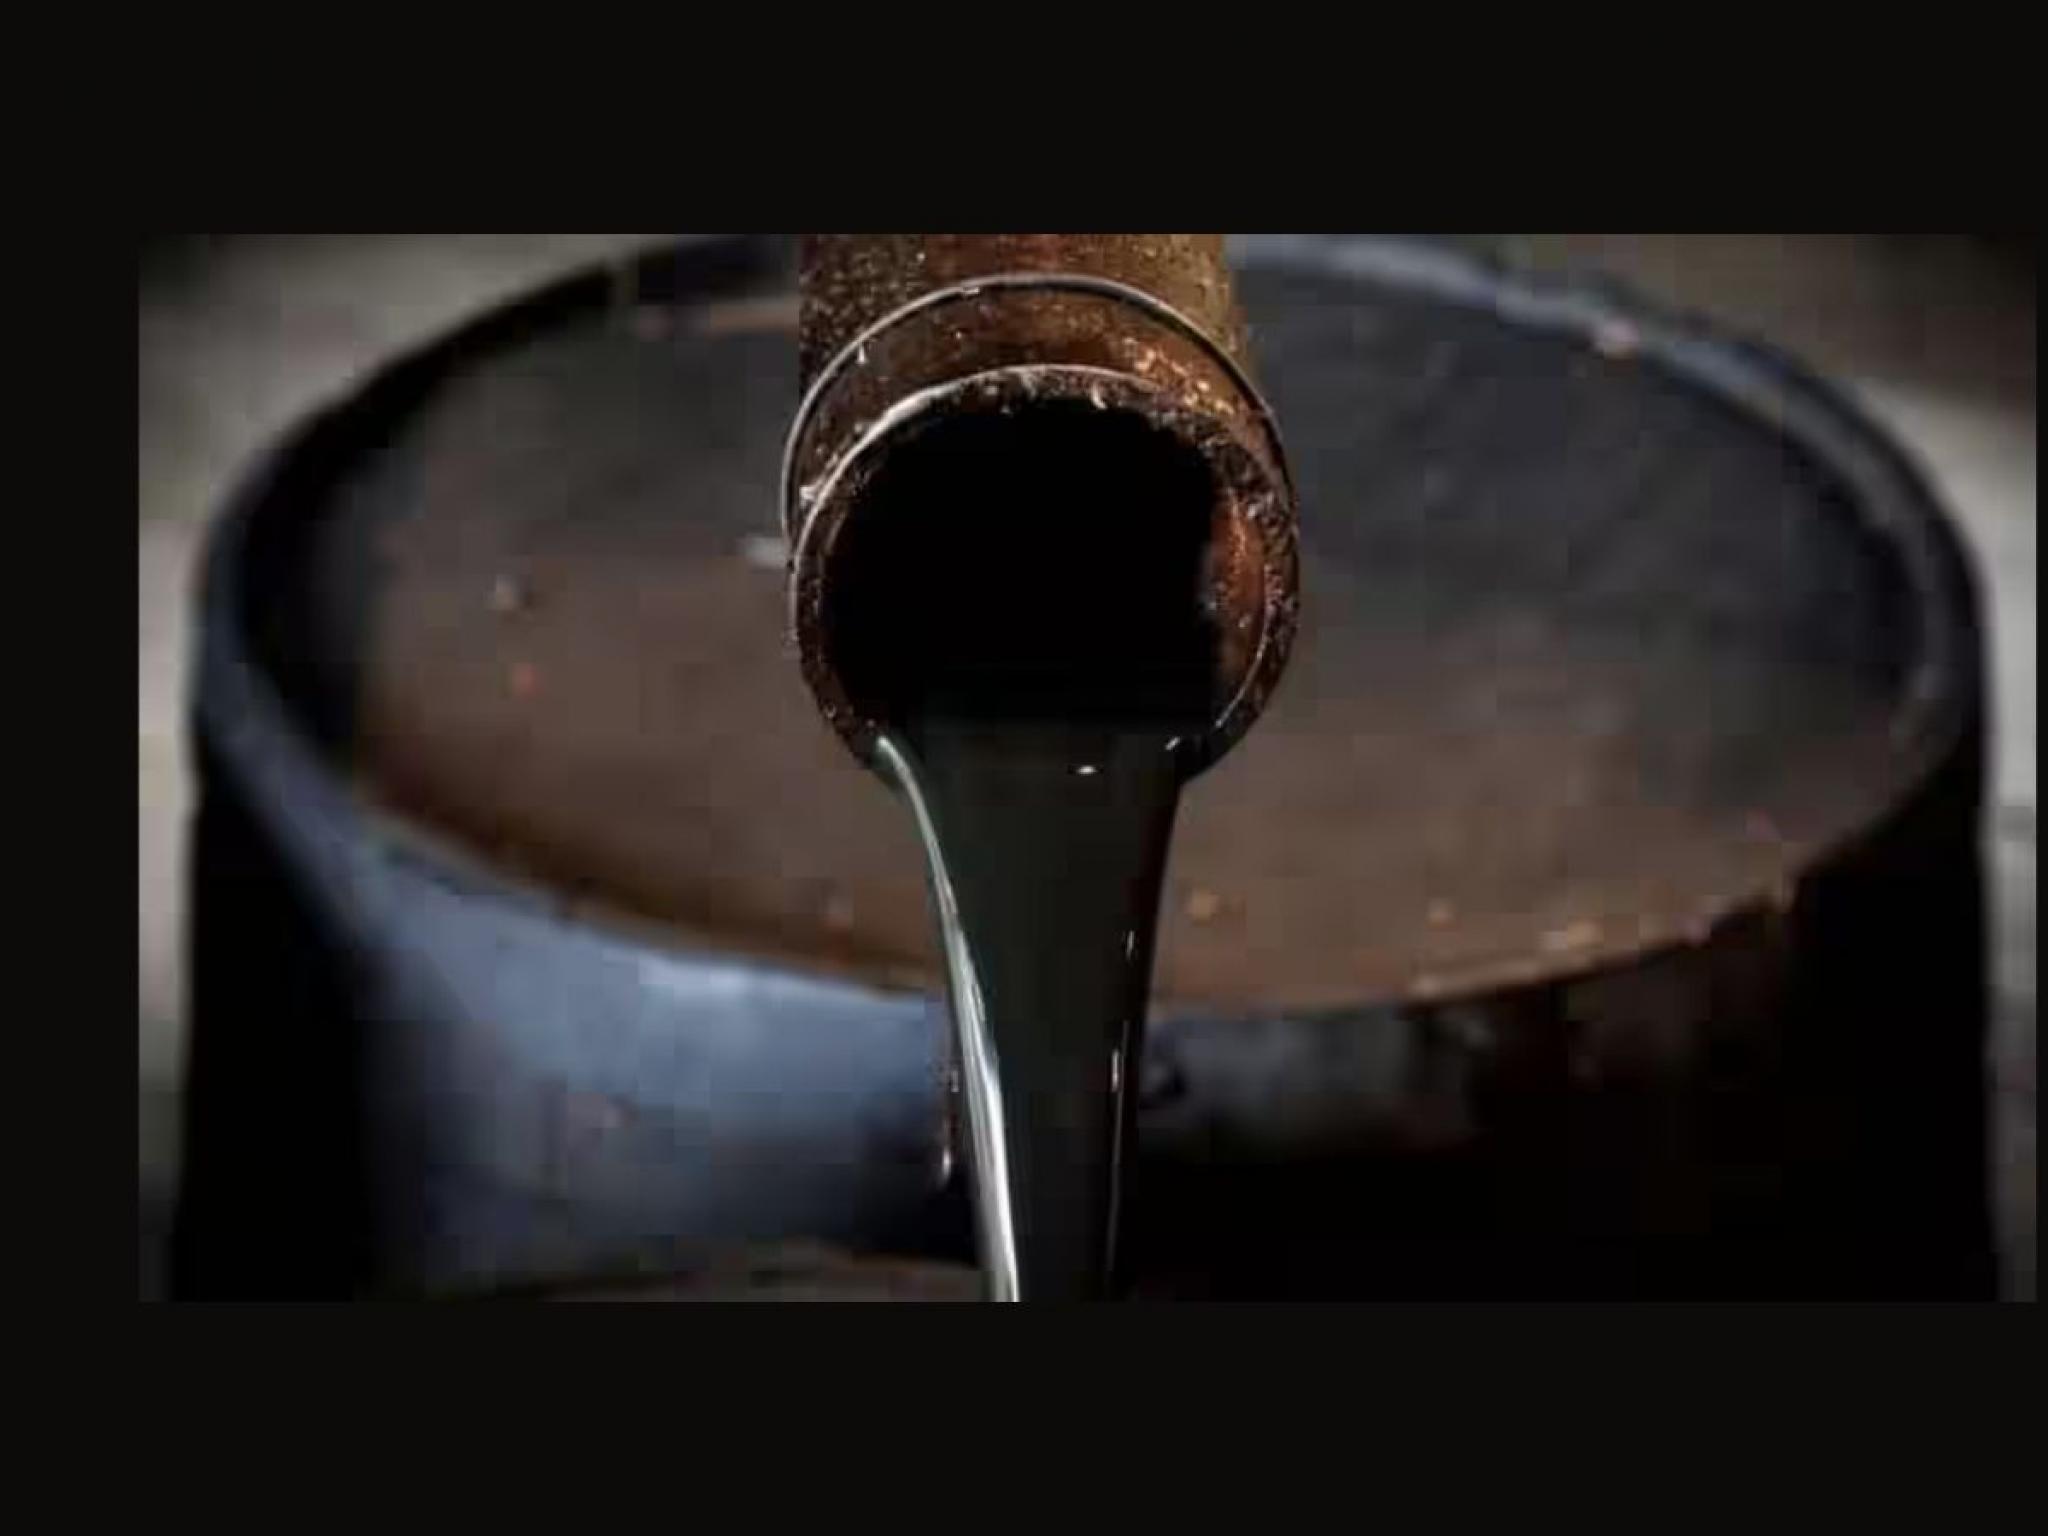  crude-oil-rises-over-2-renalytix-shares-plummet 